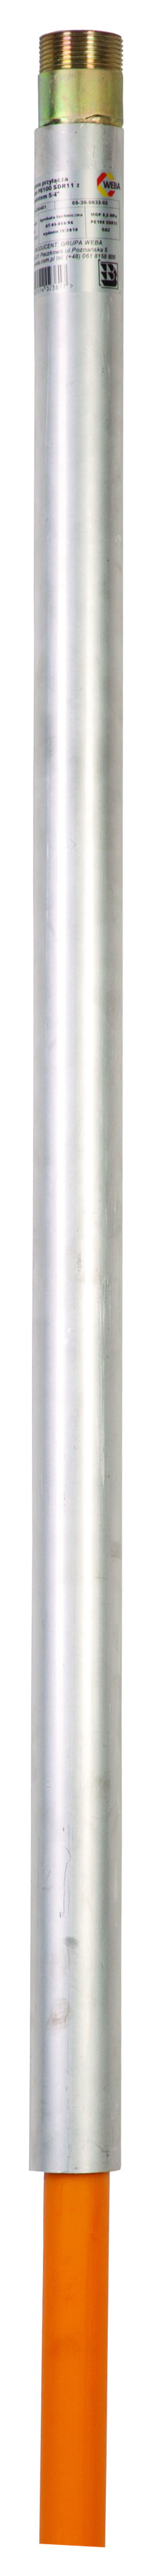 Weba Gas connection polyethylene 40mm x 5/4 